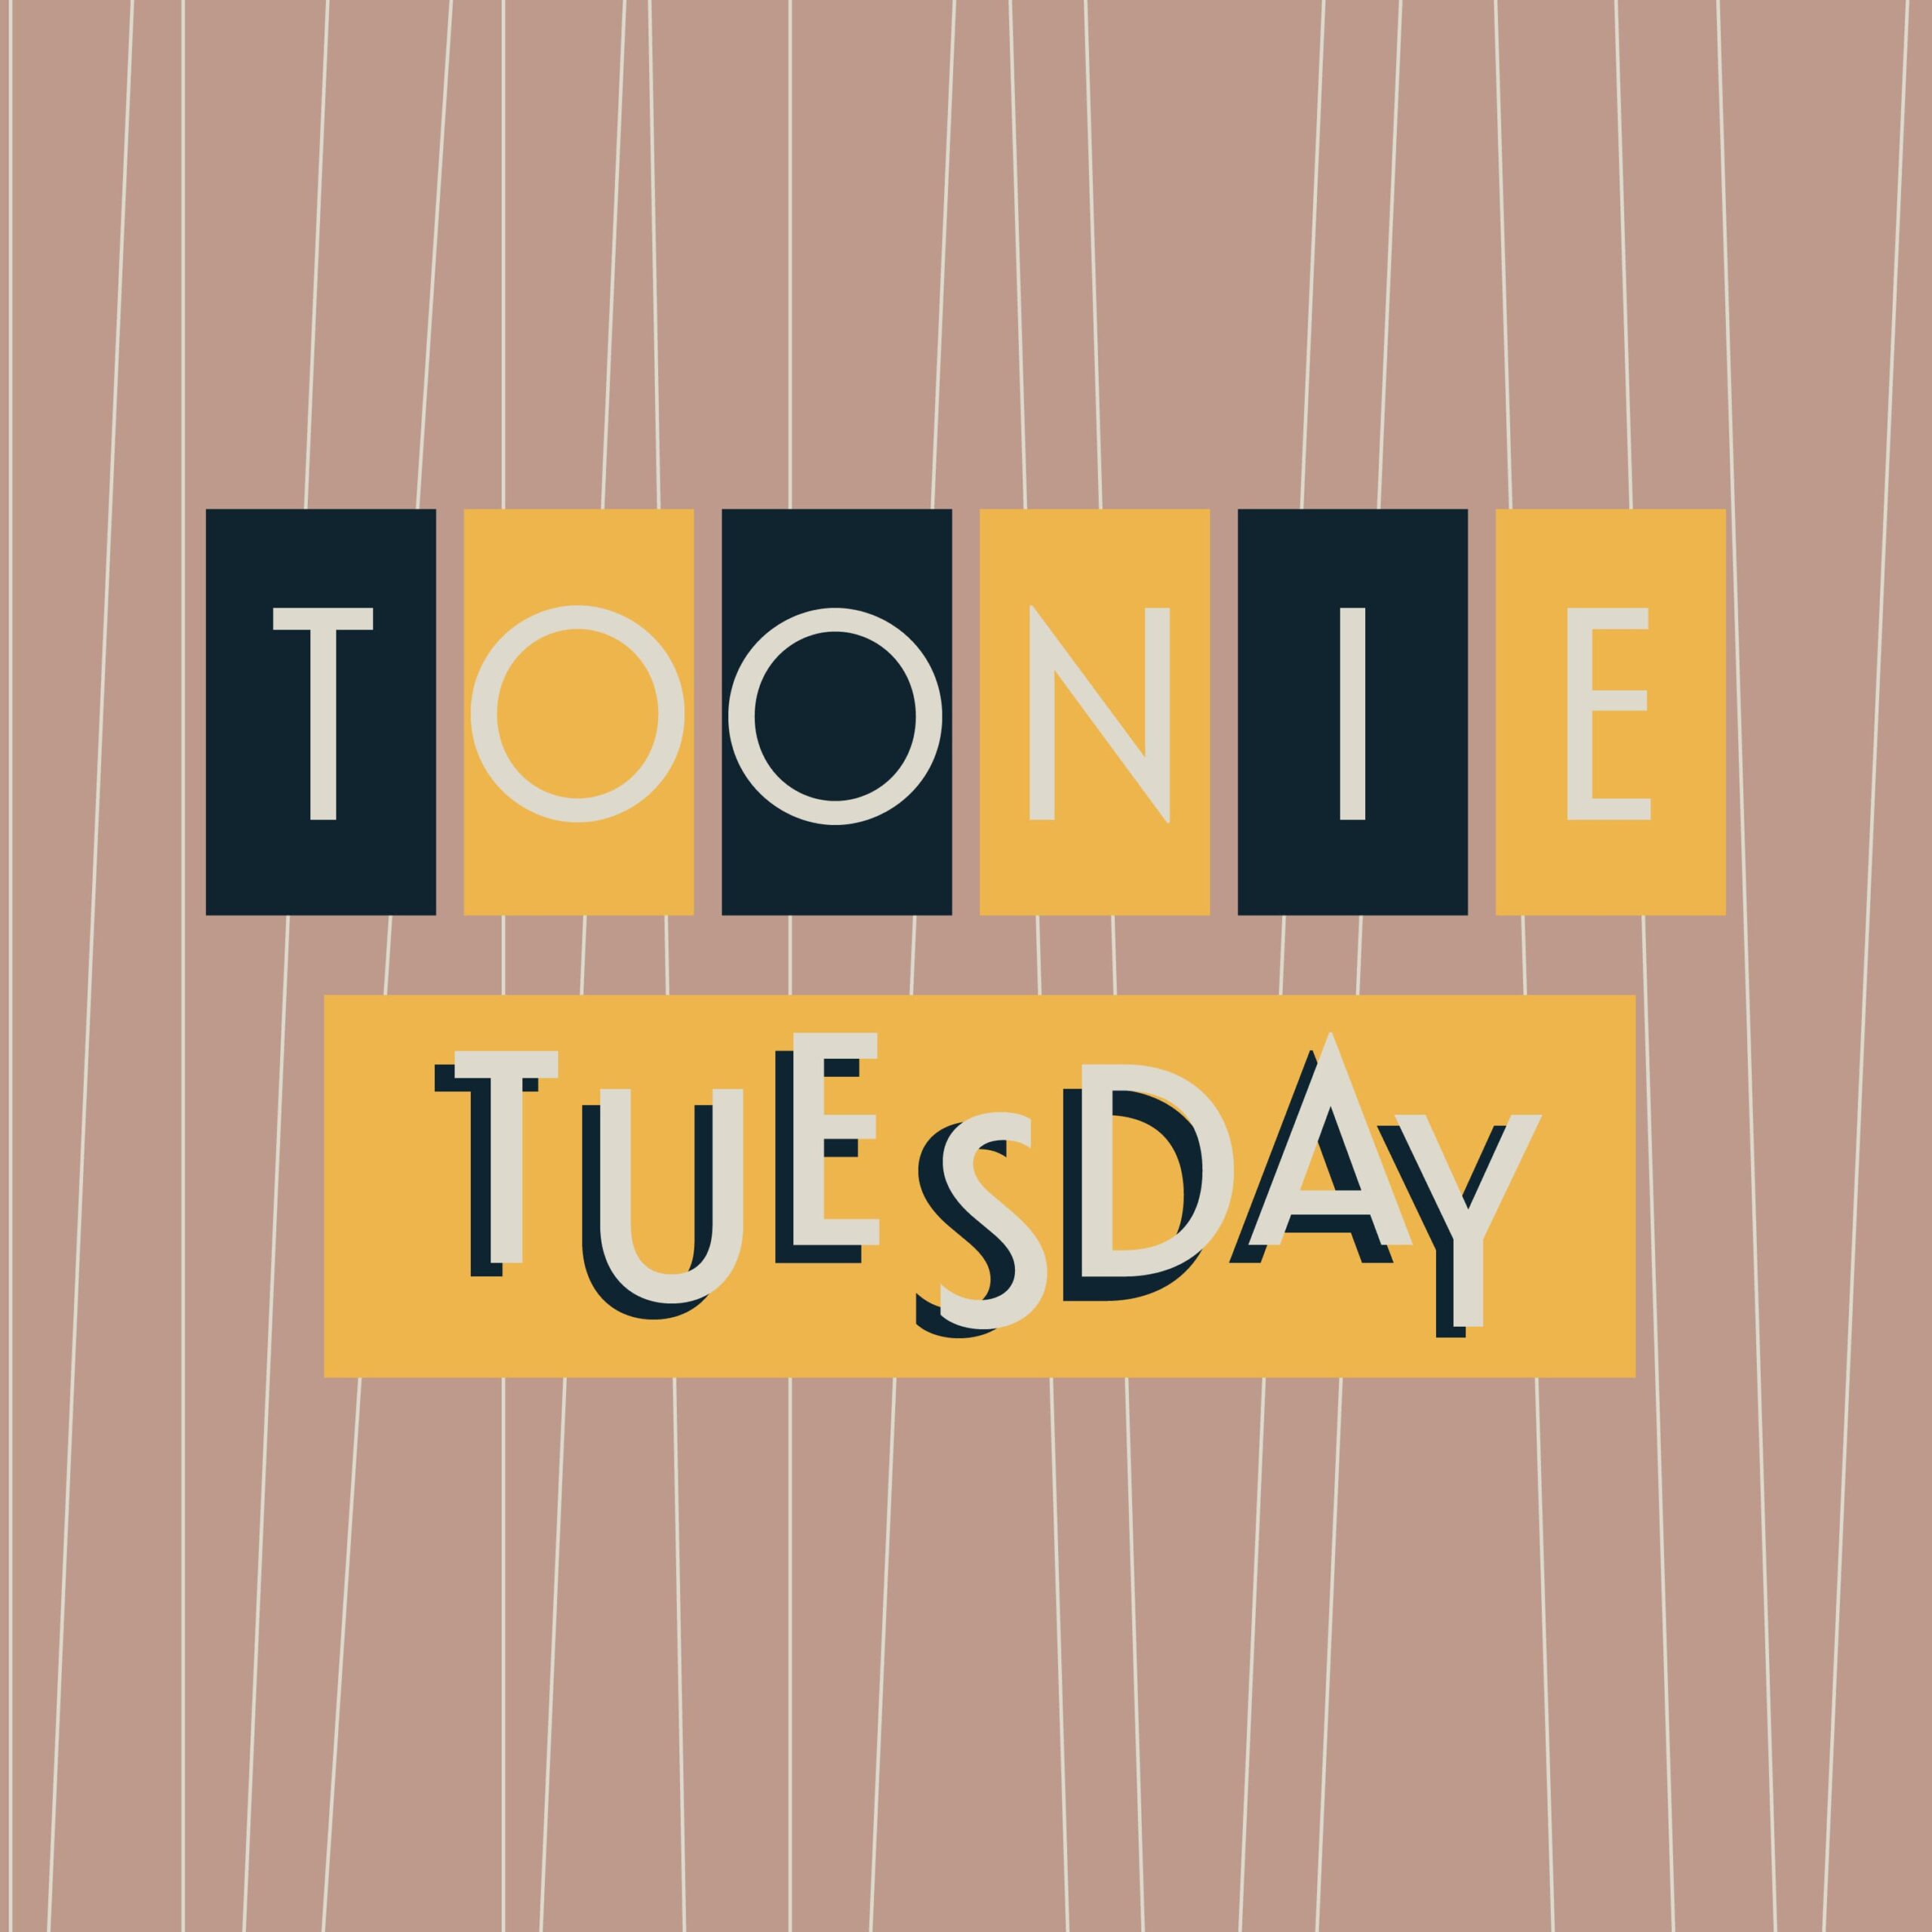  Toonie Tuesday at Bernie's